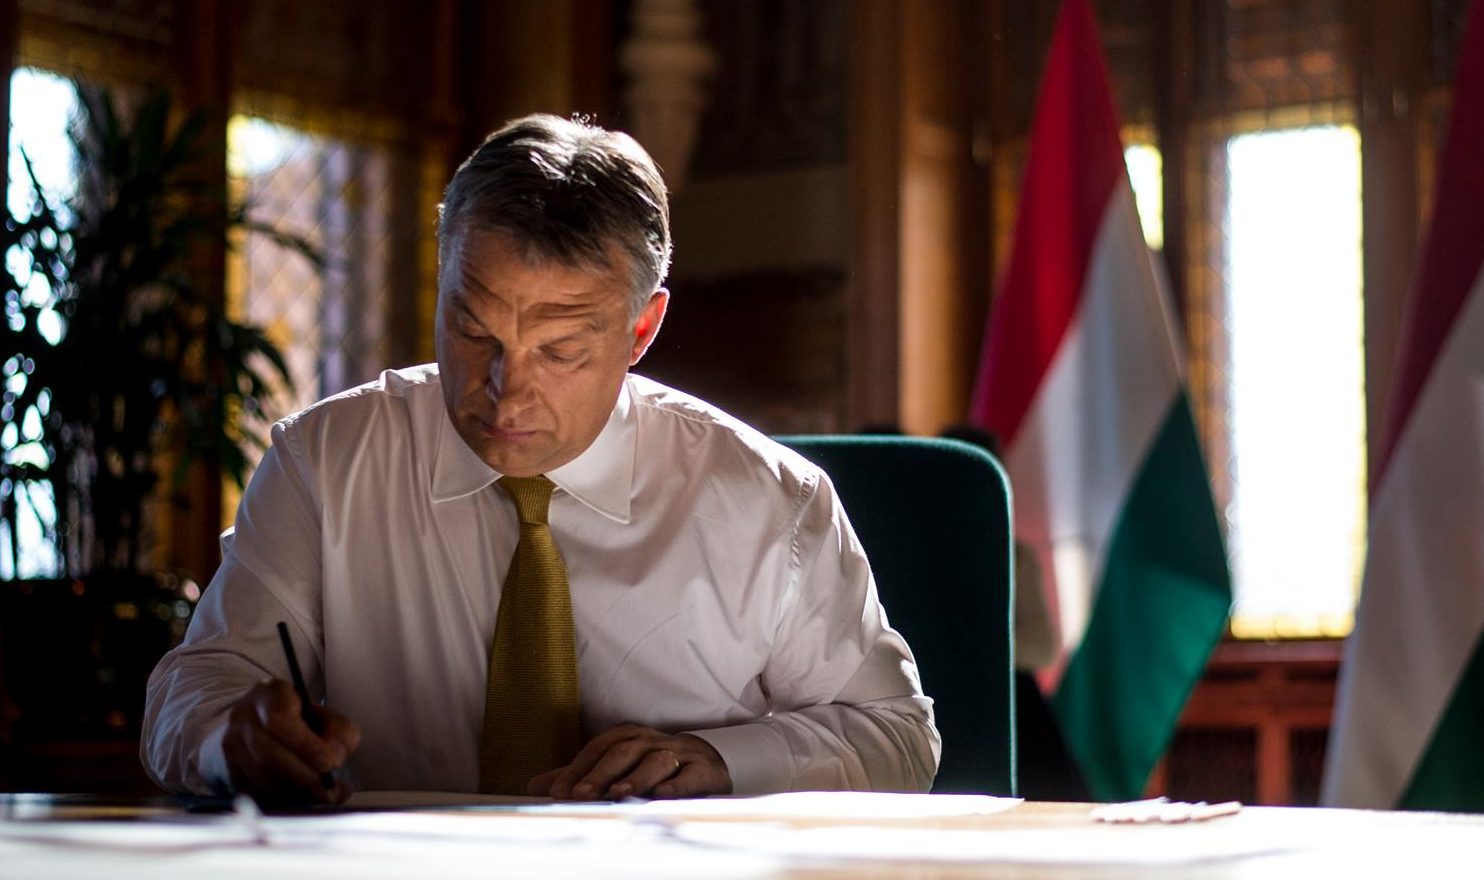 PM Orbán Greets Jewish Community on Hanukkah